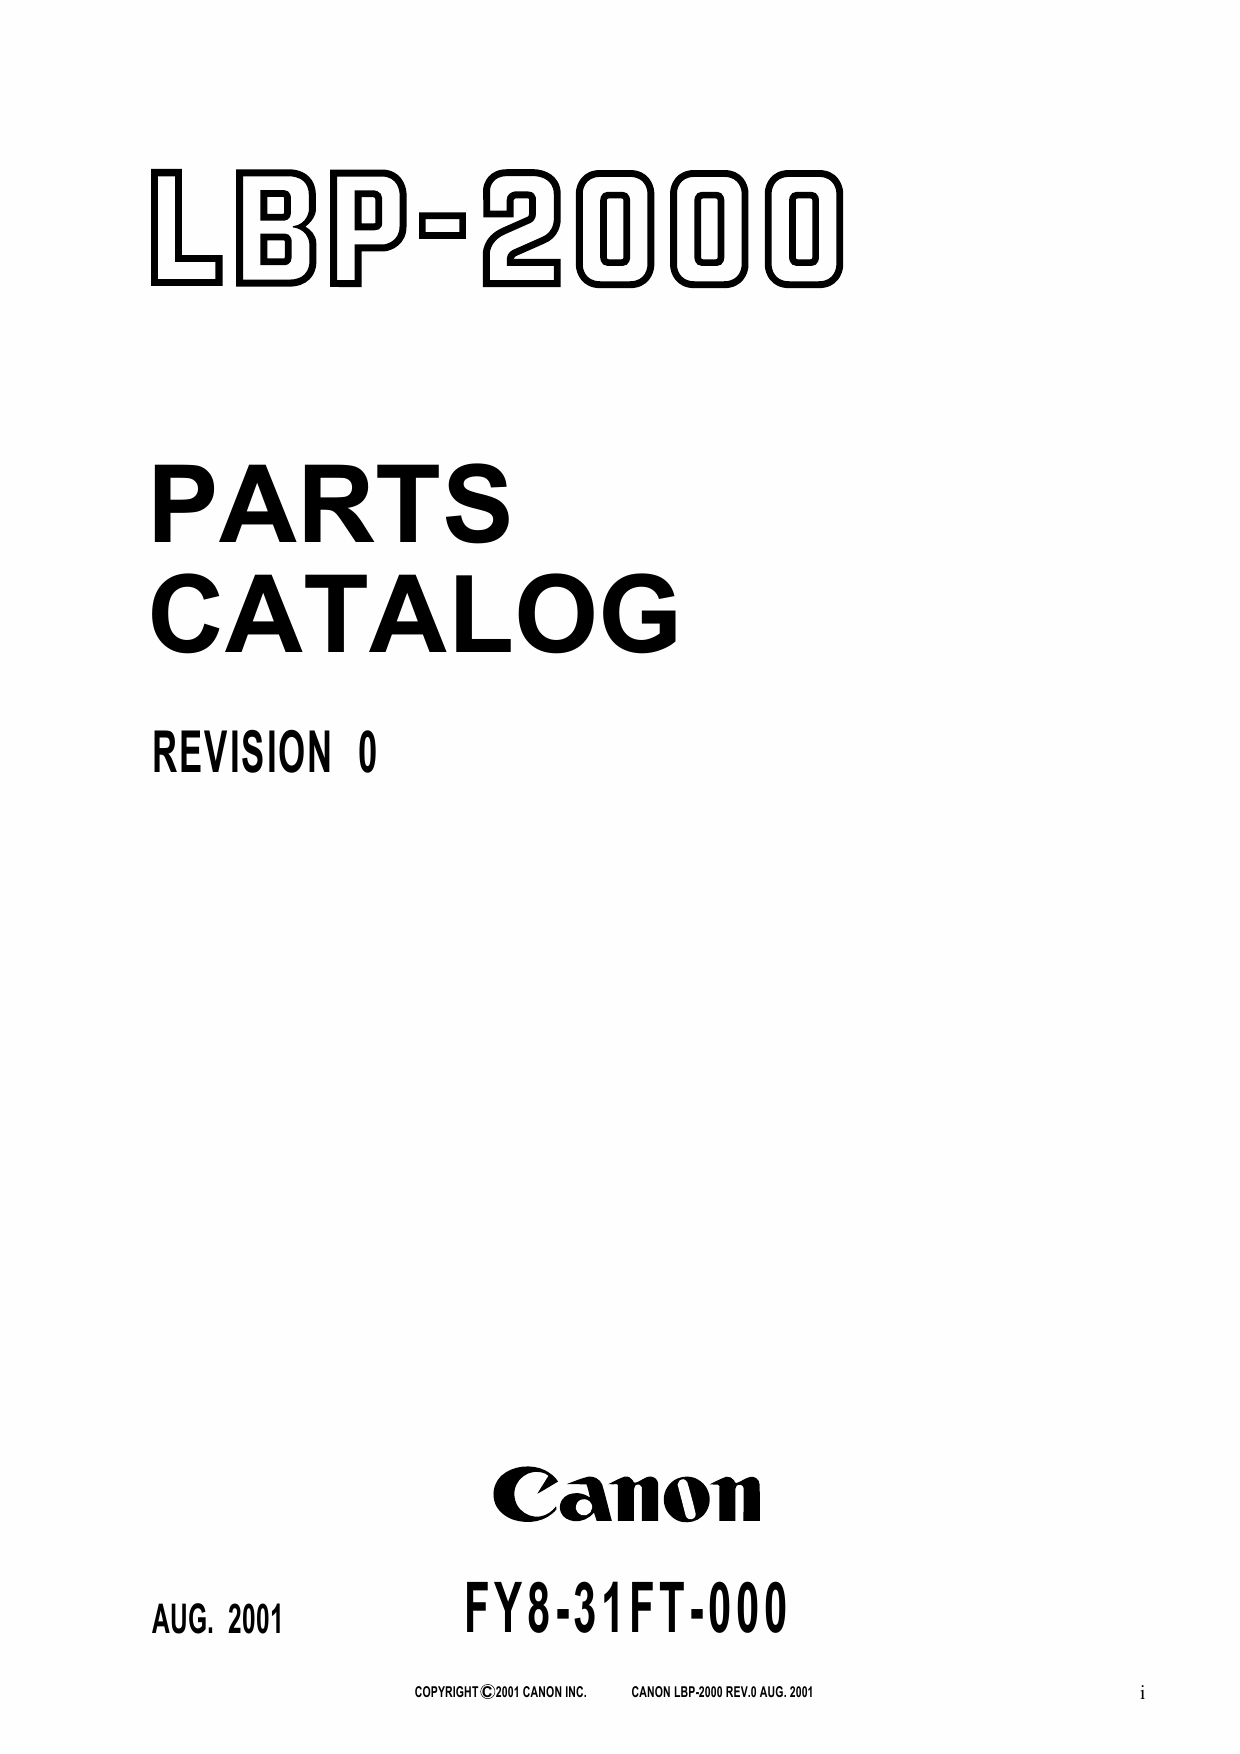 Canon imageCLASS LBP-2000 Parts Catalog Manual-1